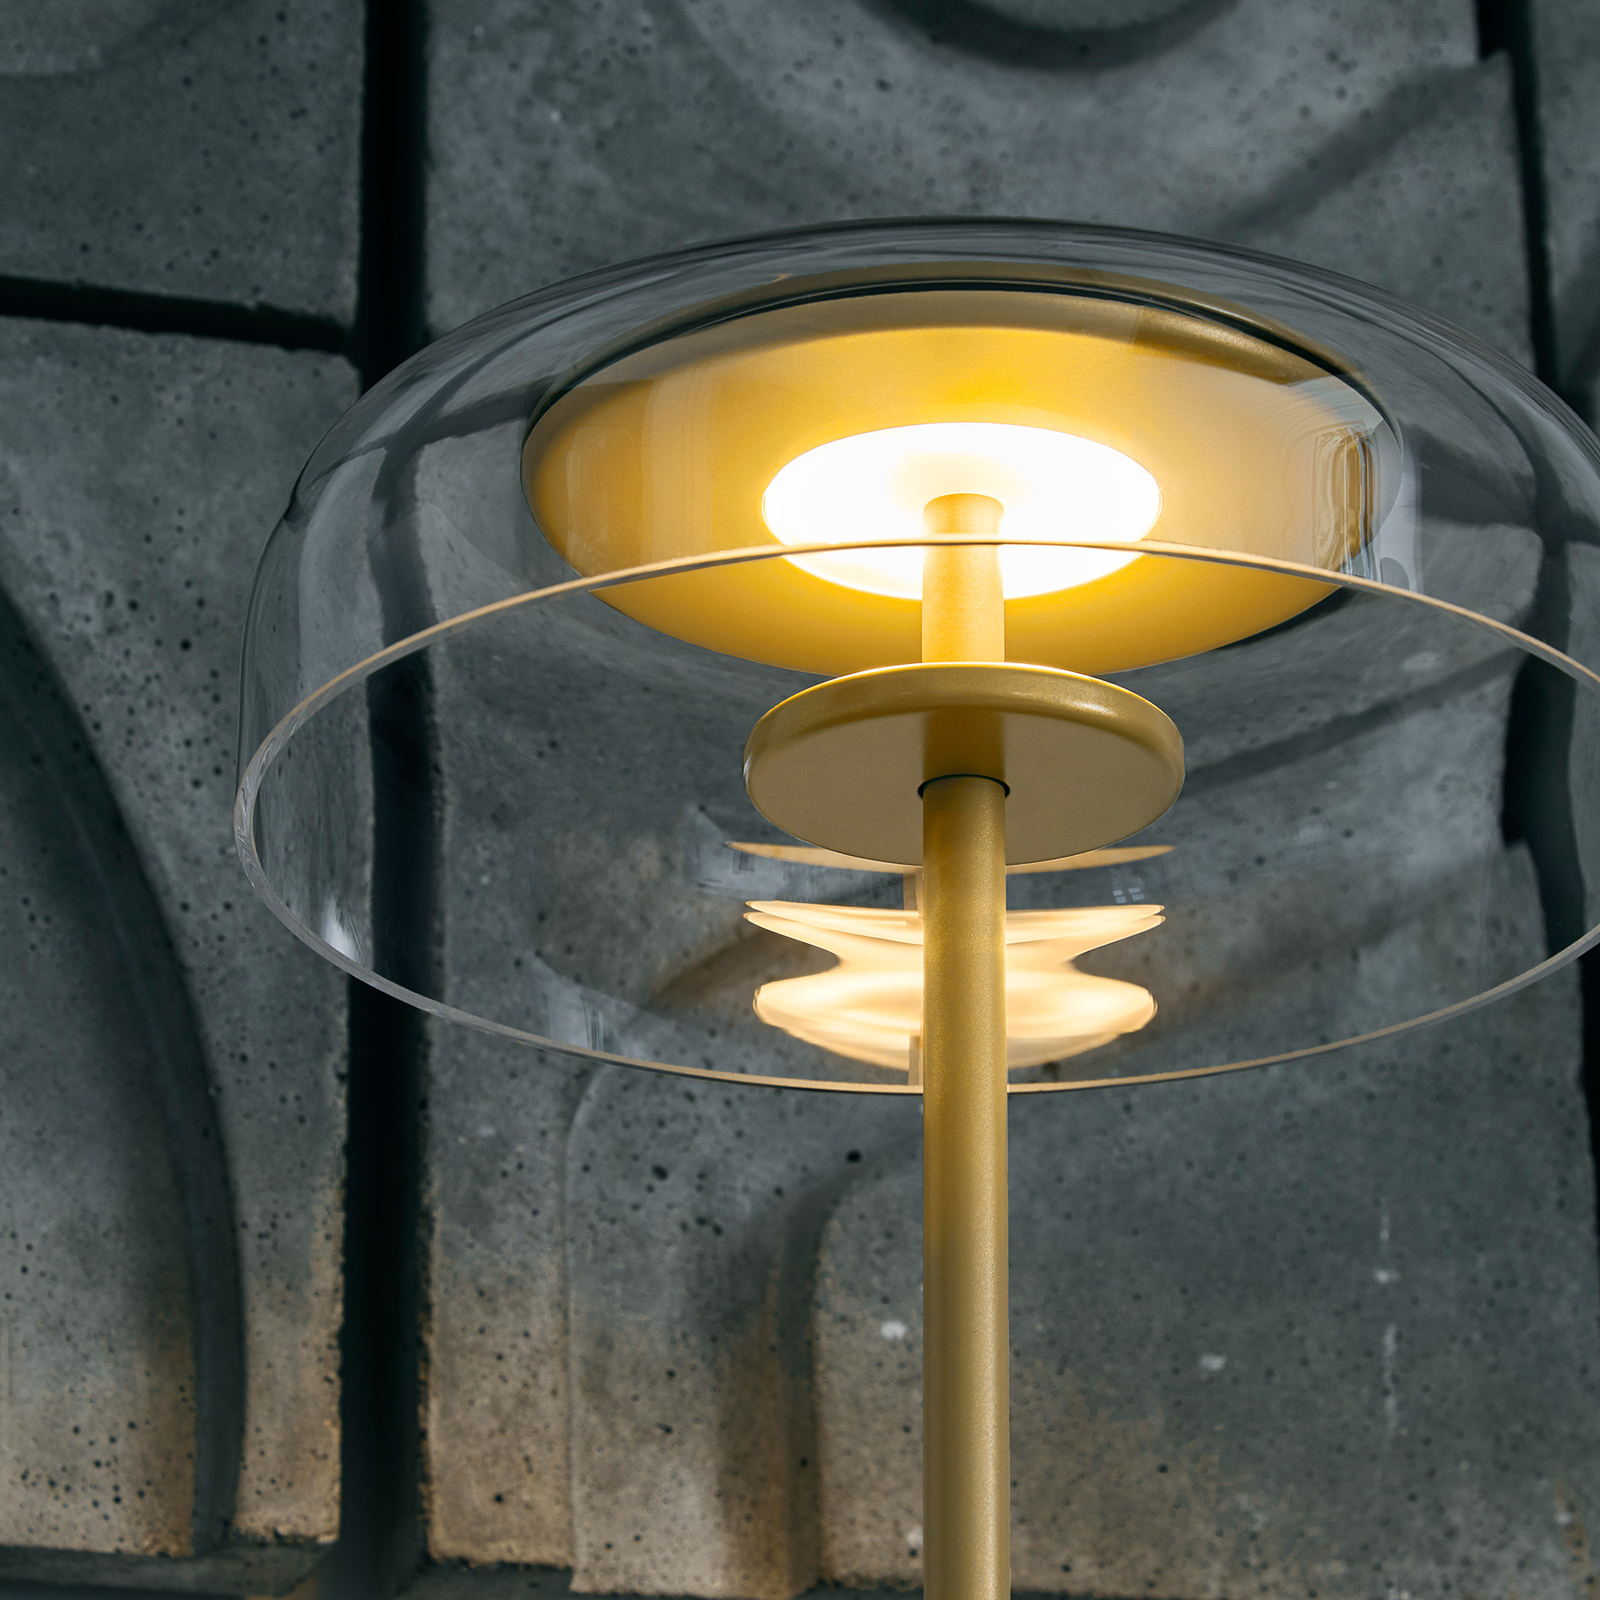 Nuura Blossi Table LED stolní lampa zlatá/čirá